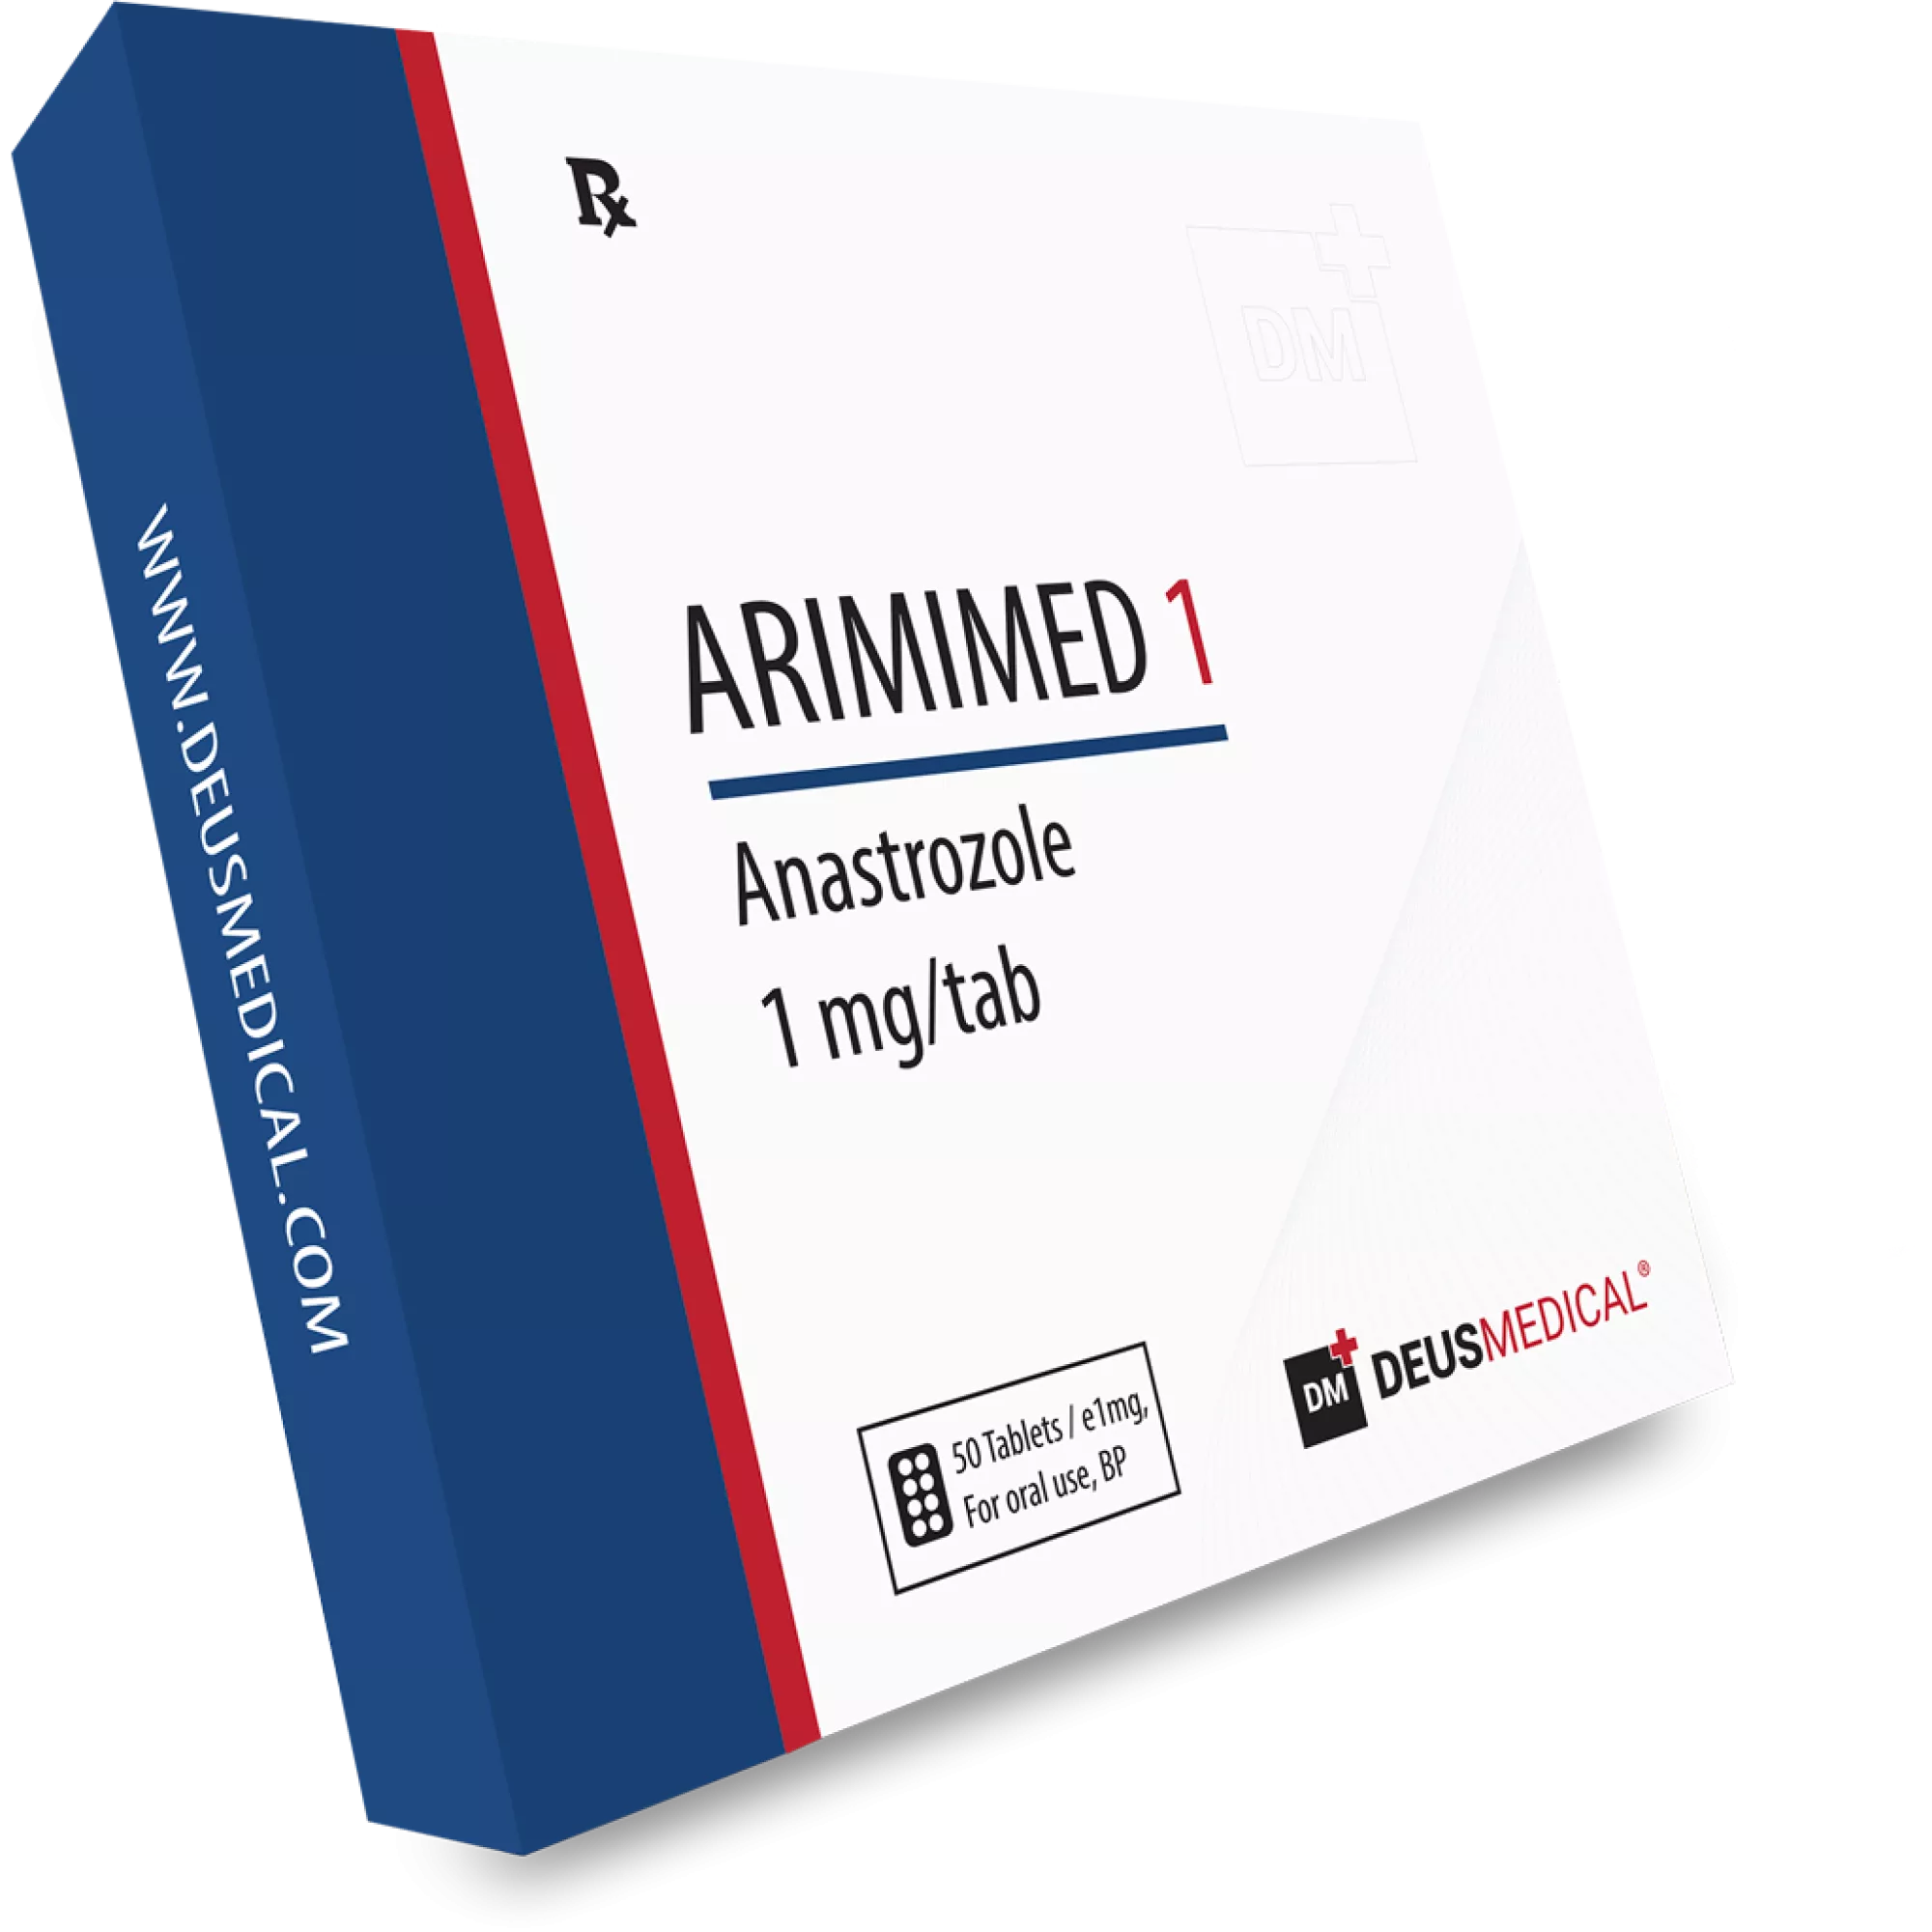 ARIMIMED 1 (Anastrozole), Deus Medical, Buy Steroids Online - www.deuspower.shop